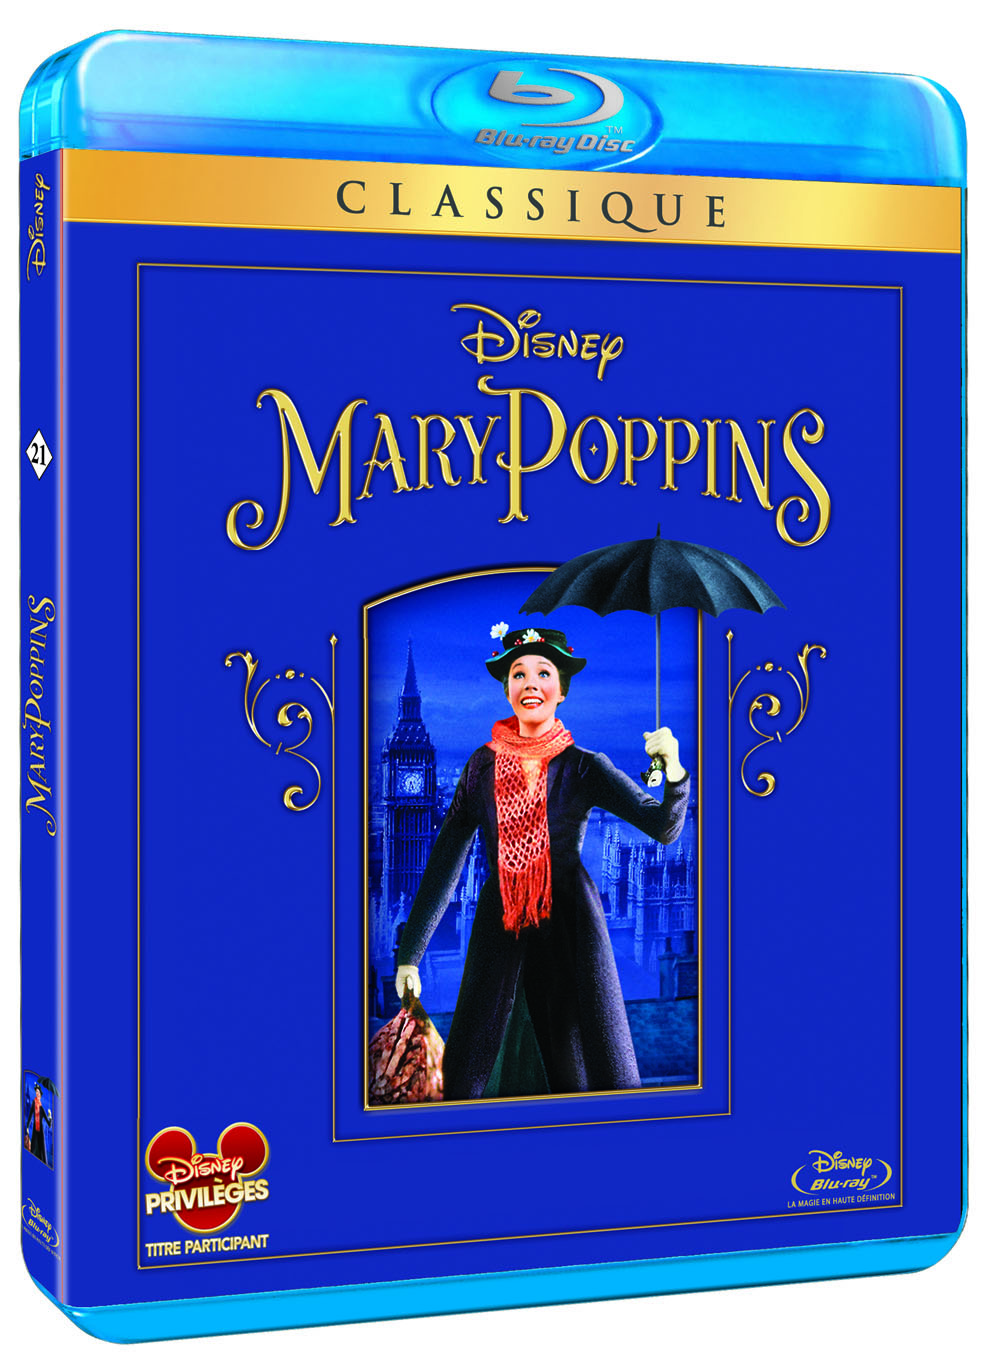 dick van dyke - Mary Poppins : notre avis sur le Blu-Ray blu ray mary poppins edition 50e anniversaire 124335